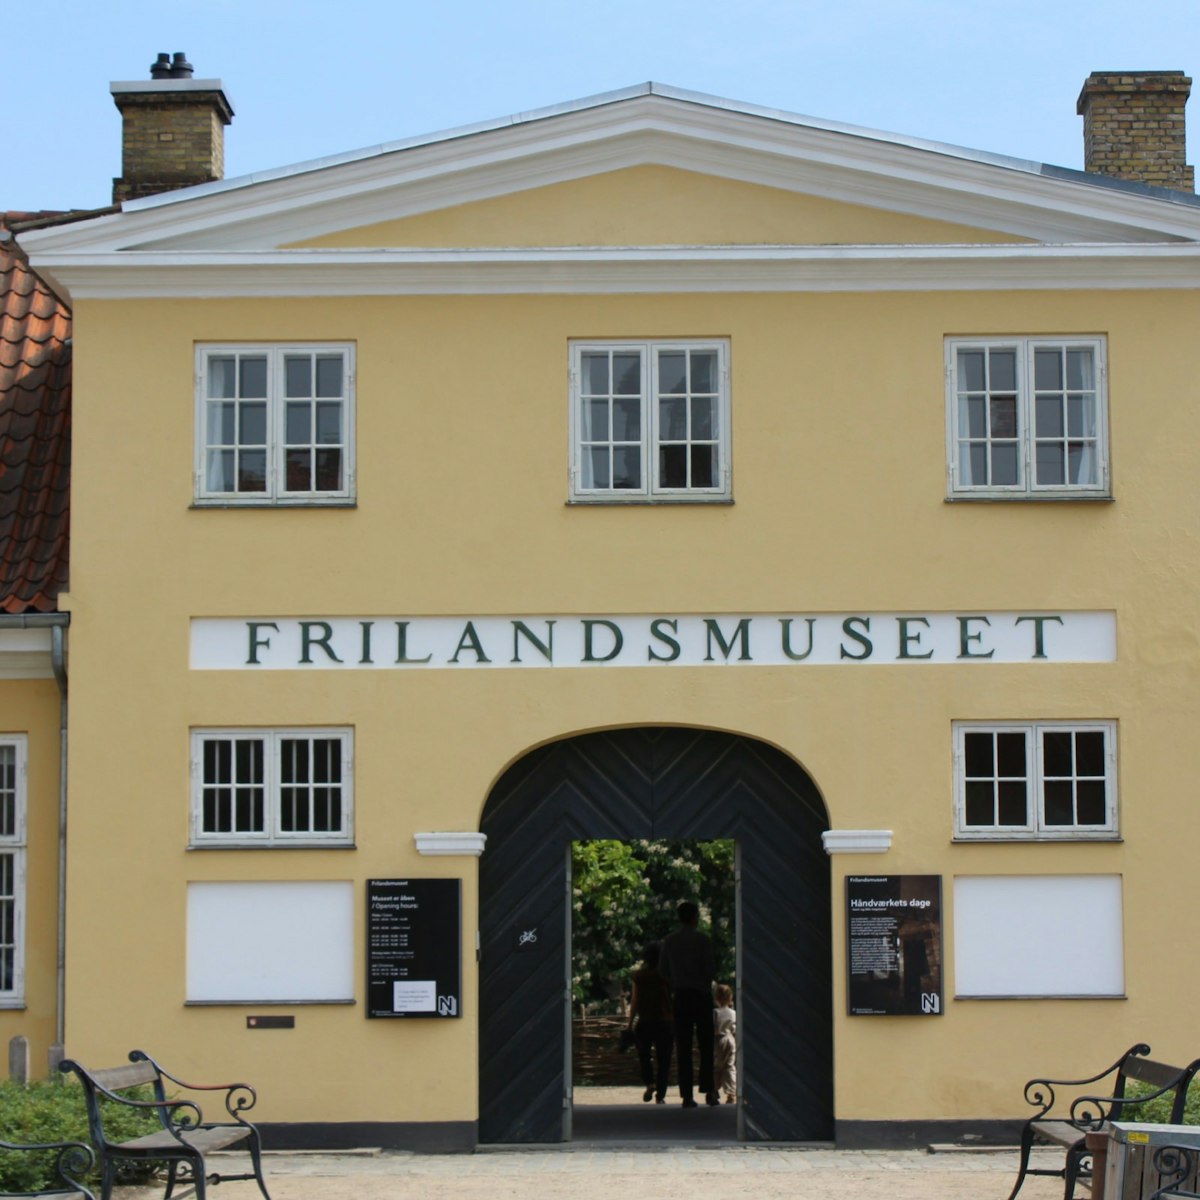 Frilandsmuseet entrance